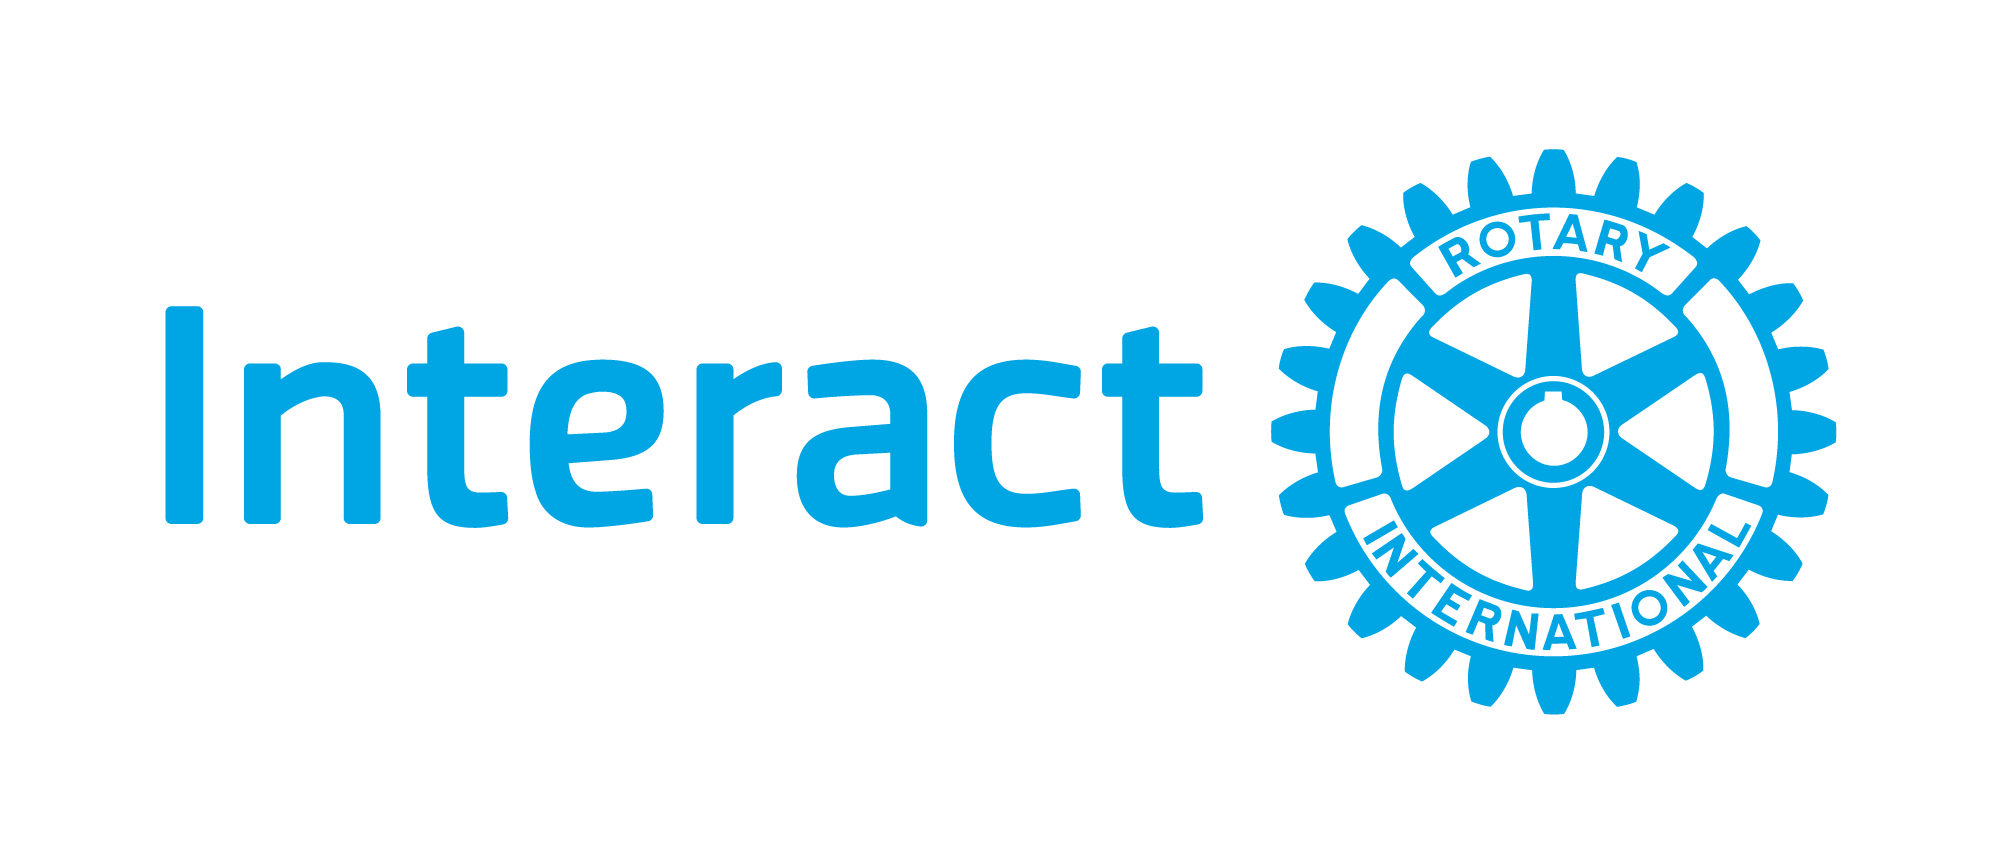 Interact | Rotary International District 5130